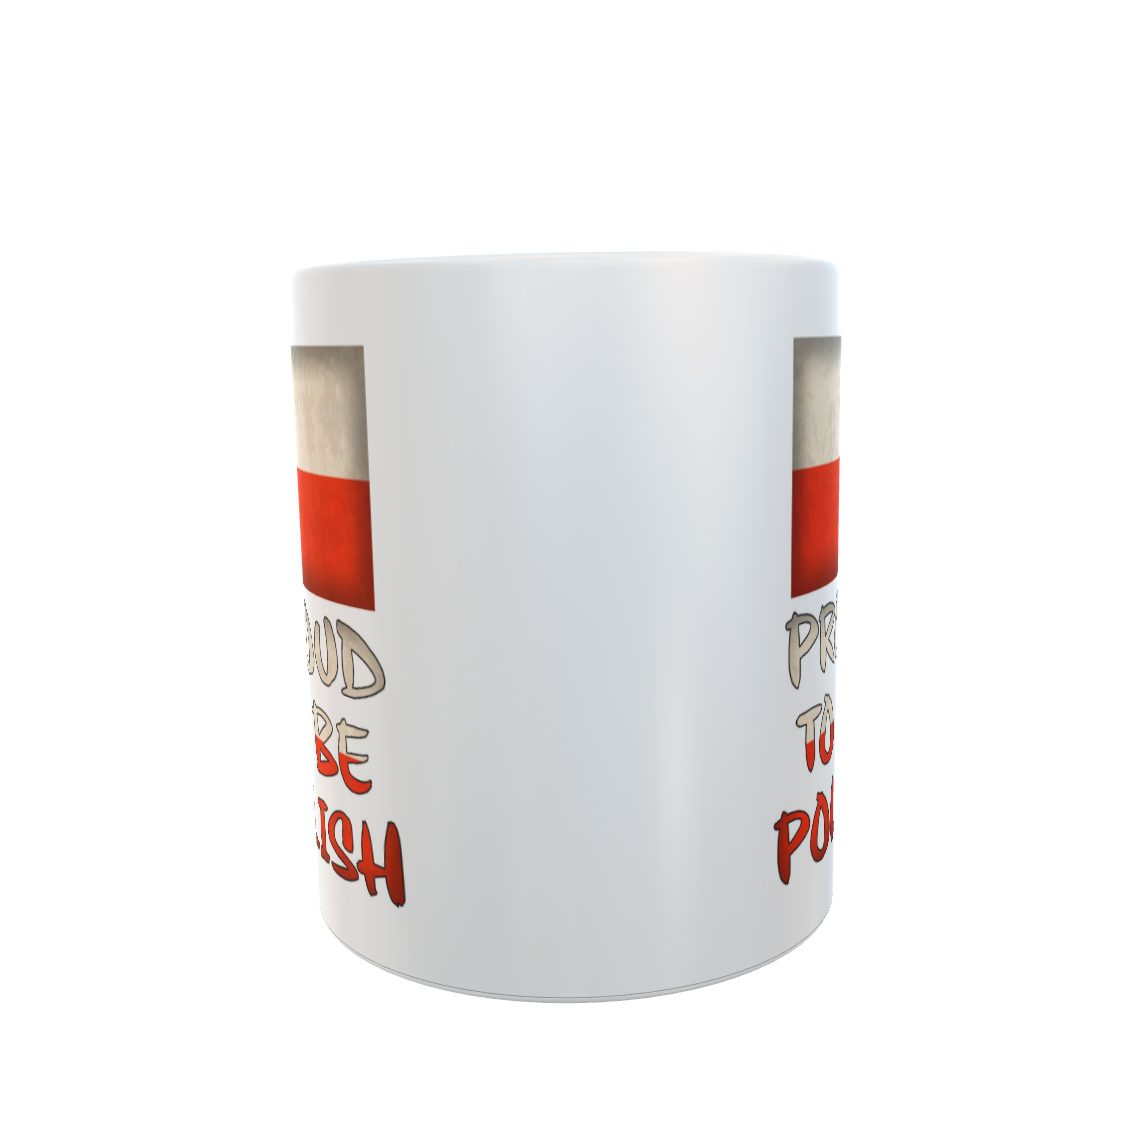 Poland Mug Gift - Proud To Be Polish - Nice Cute Novelty Nationality Flag Cute Cup Present